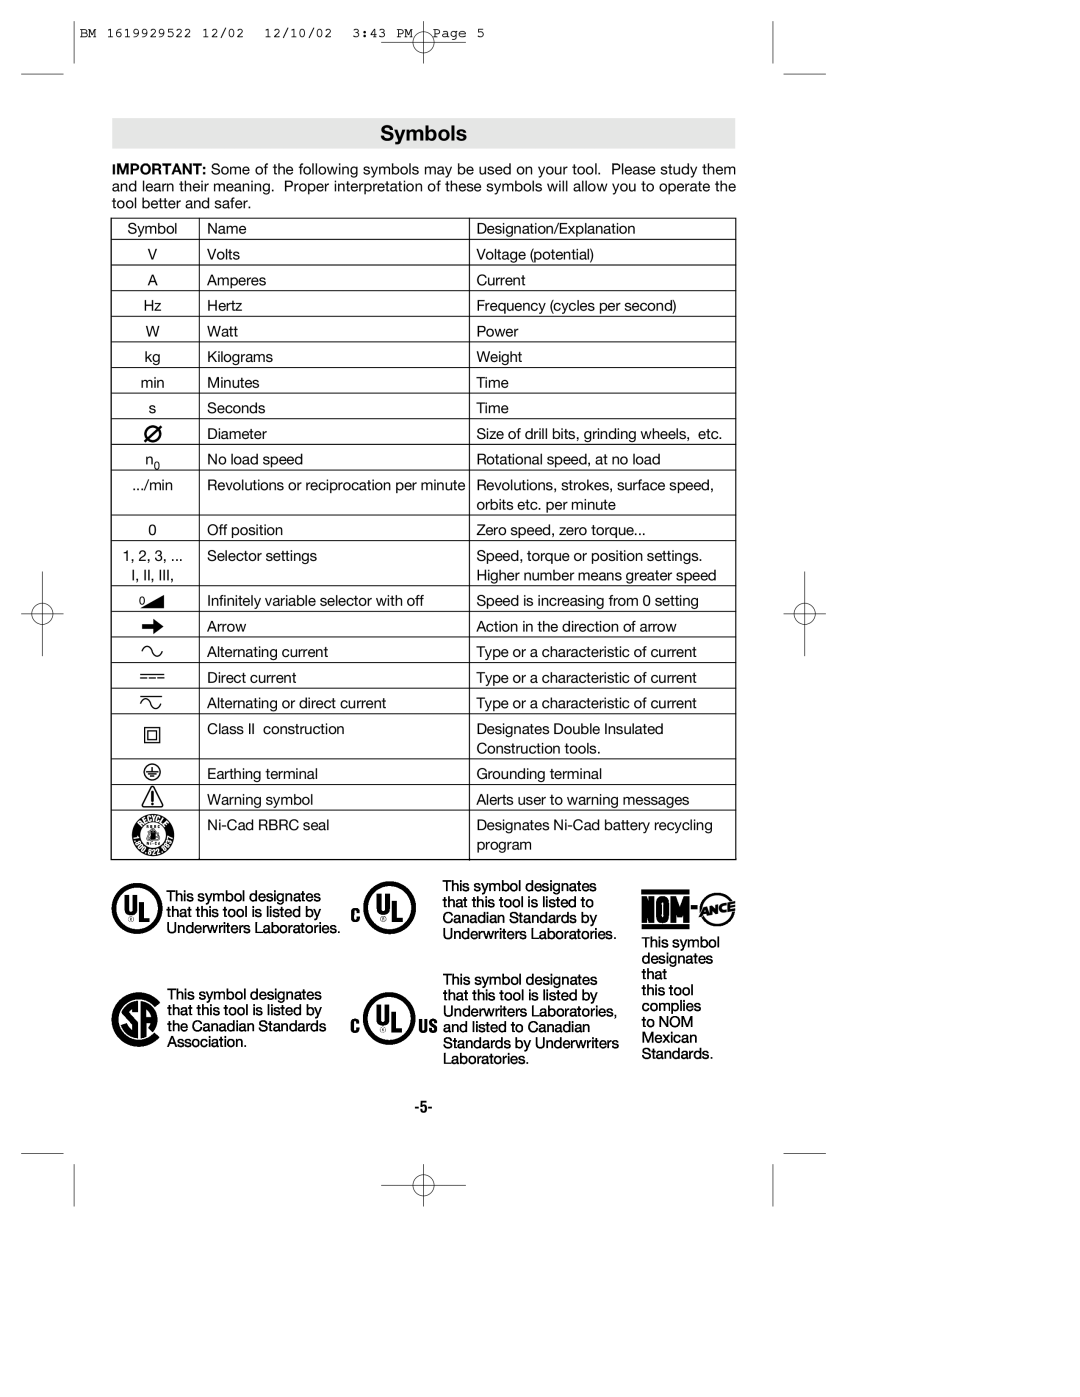 Bosch Power Tools 11304KD manual Symbols, BM 1619929522 12/02 12/10/02 343 PM Page 